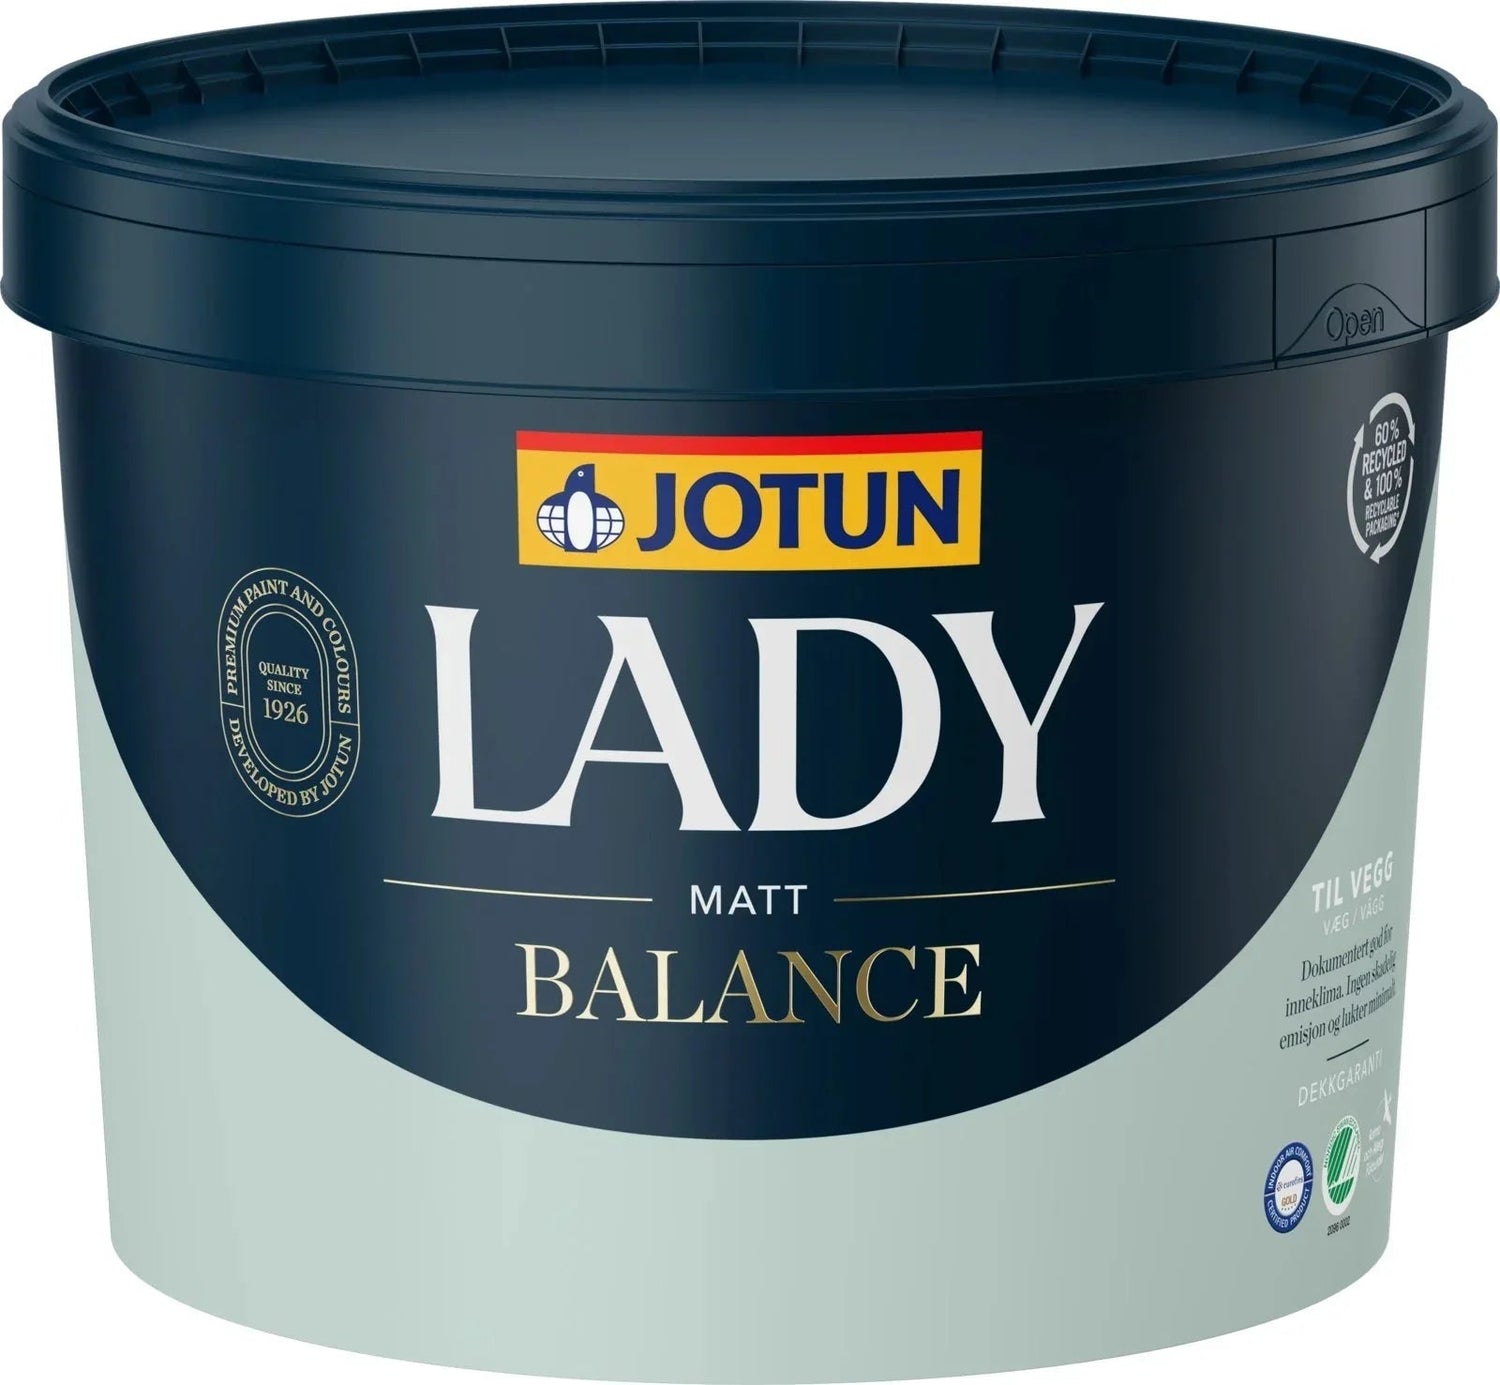 0125 PALMETTO - Jotun Lady Balance - Malprivat.dk